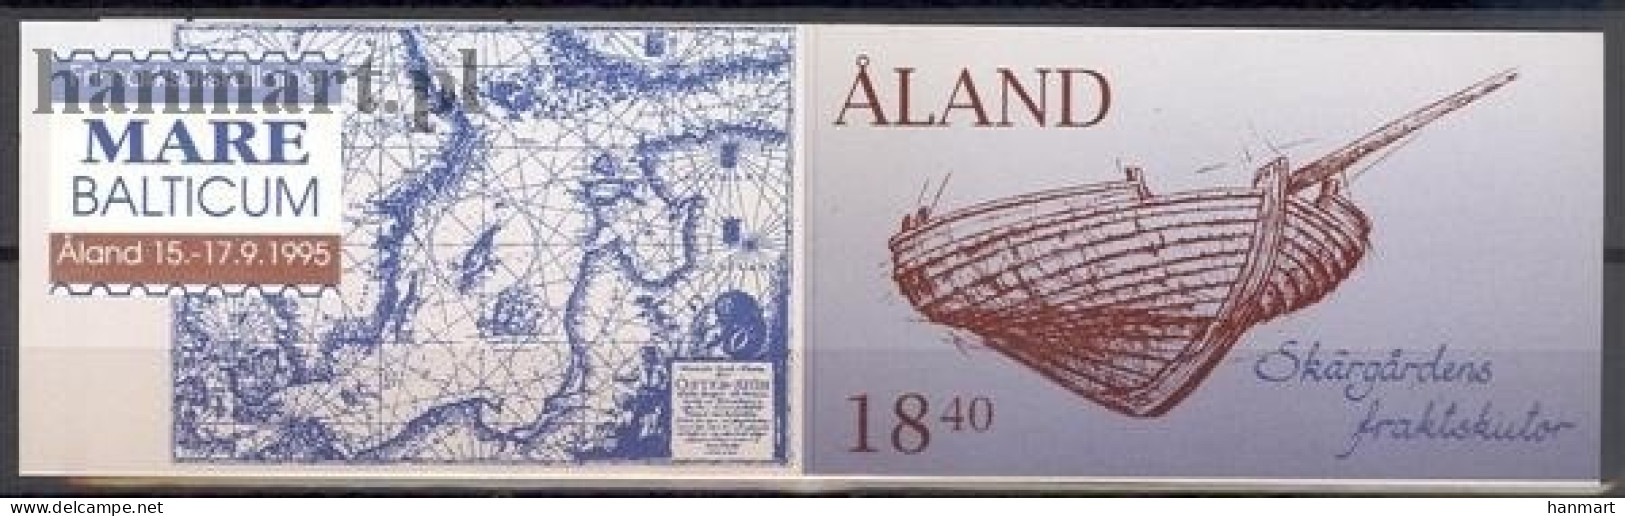 Åland Islands 1995 Mi Mh 3 MNH  (ZE3 ALNmh3) - Ships